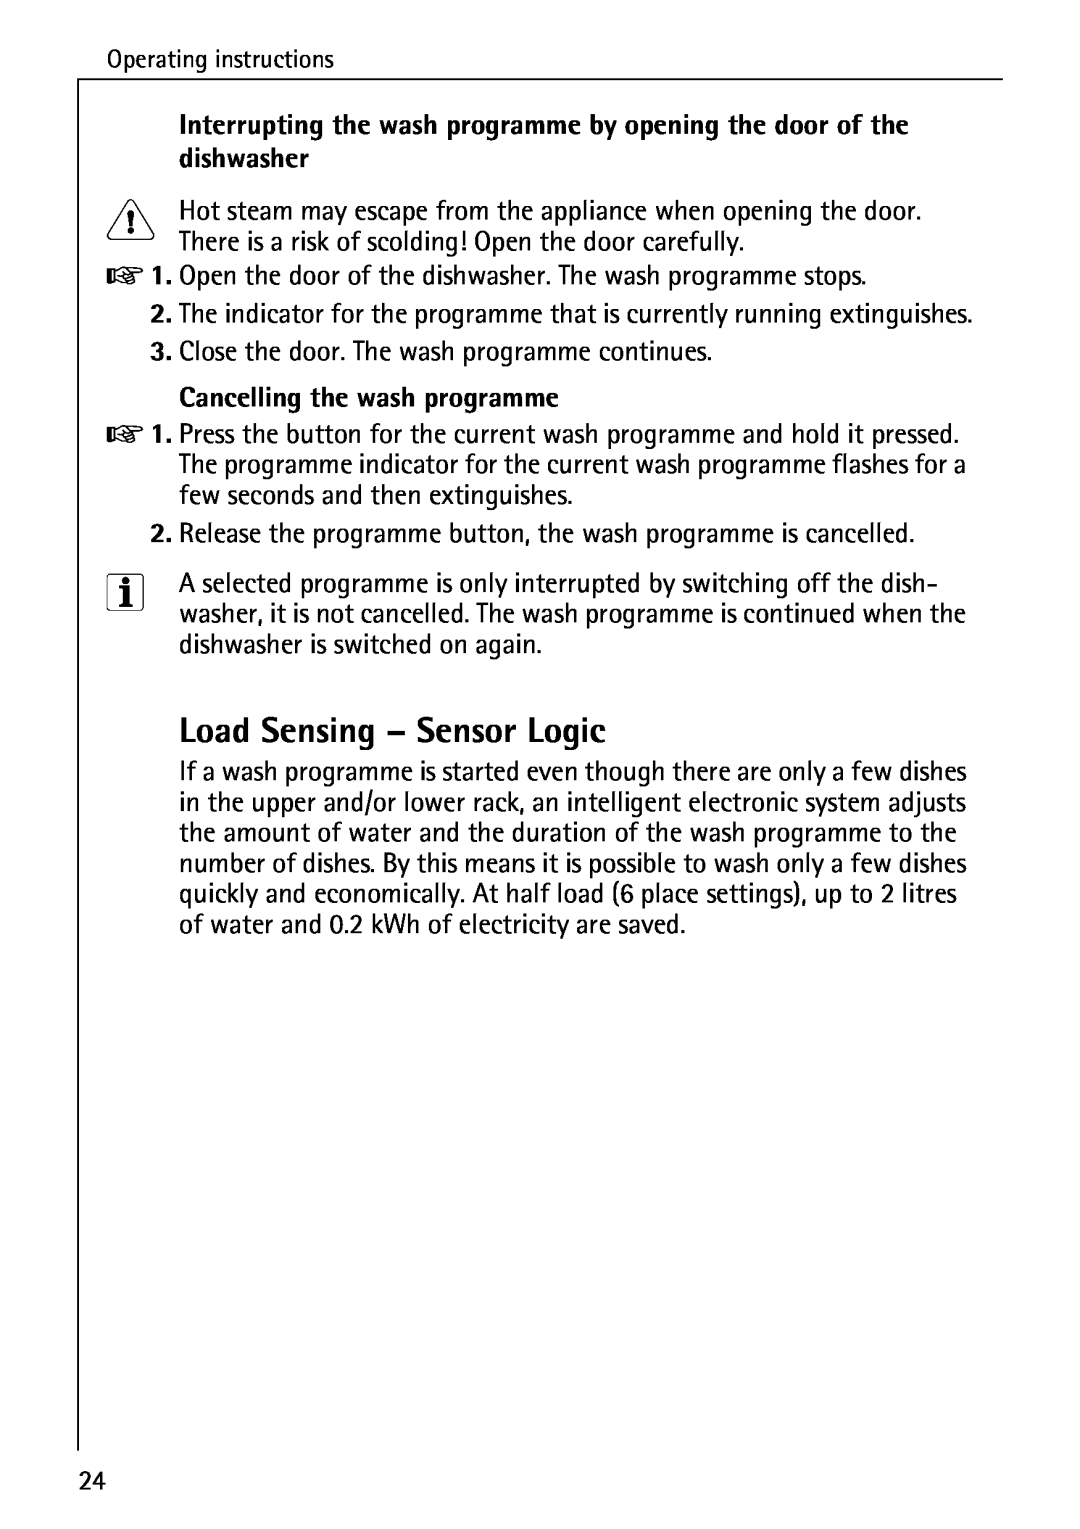 AEG 4270 I manual Load Sensing - Sensor Logic, dishwasher, Cancelling the wash programme 